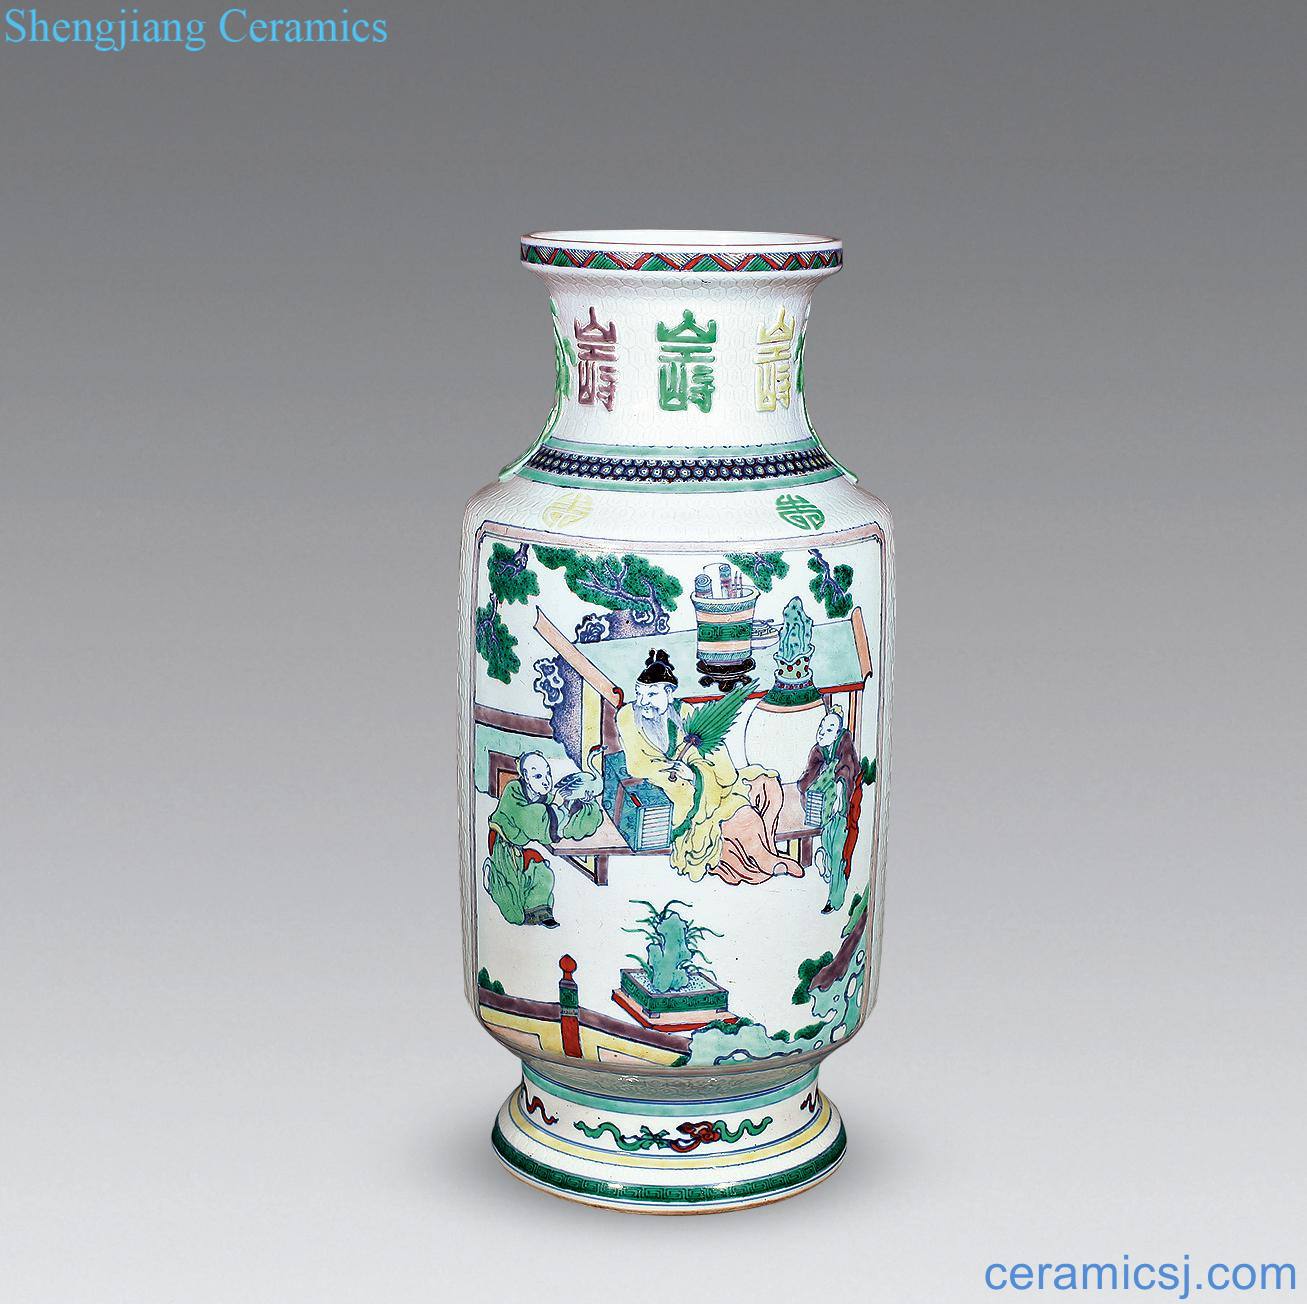 Qing yongzheng bucket color medallion figures show